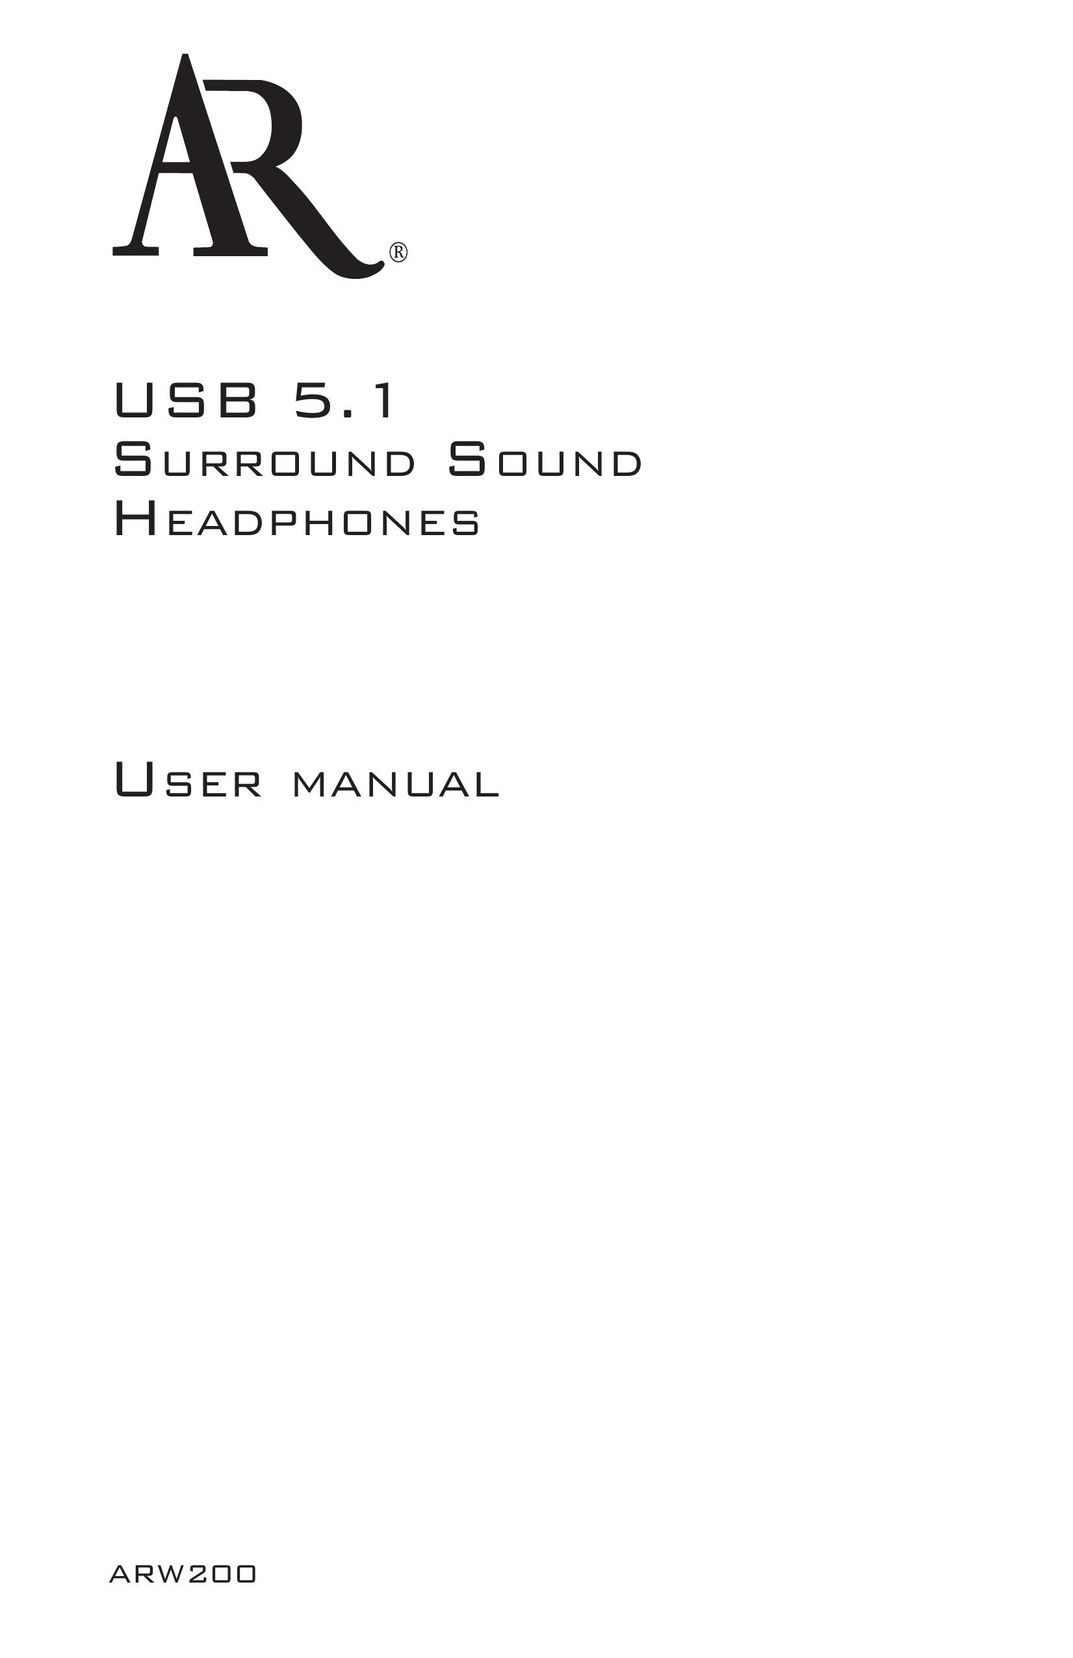 Acoustic Research ARW200 Headphones User Manual